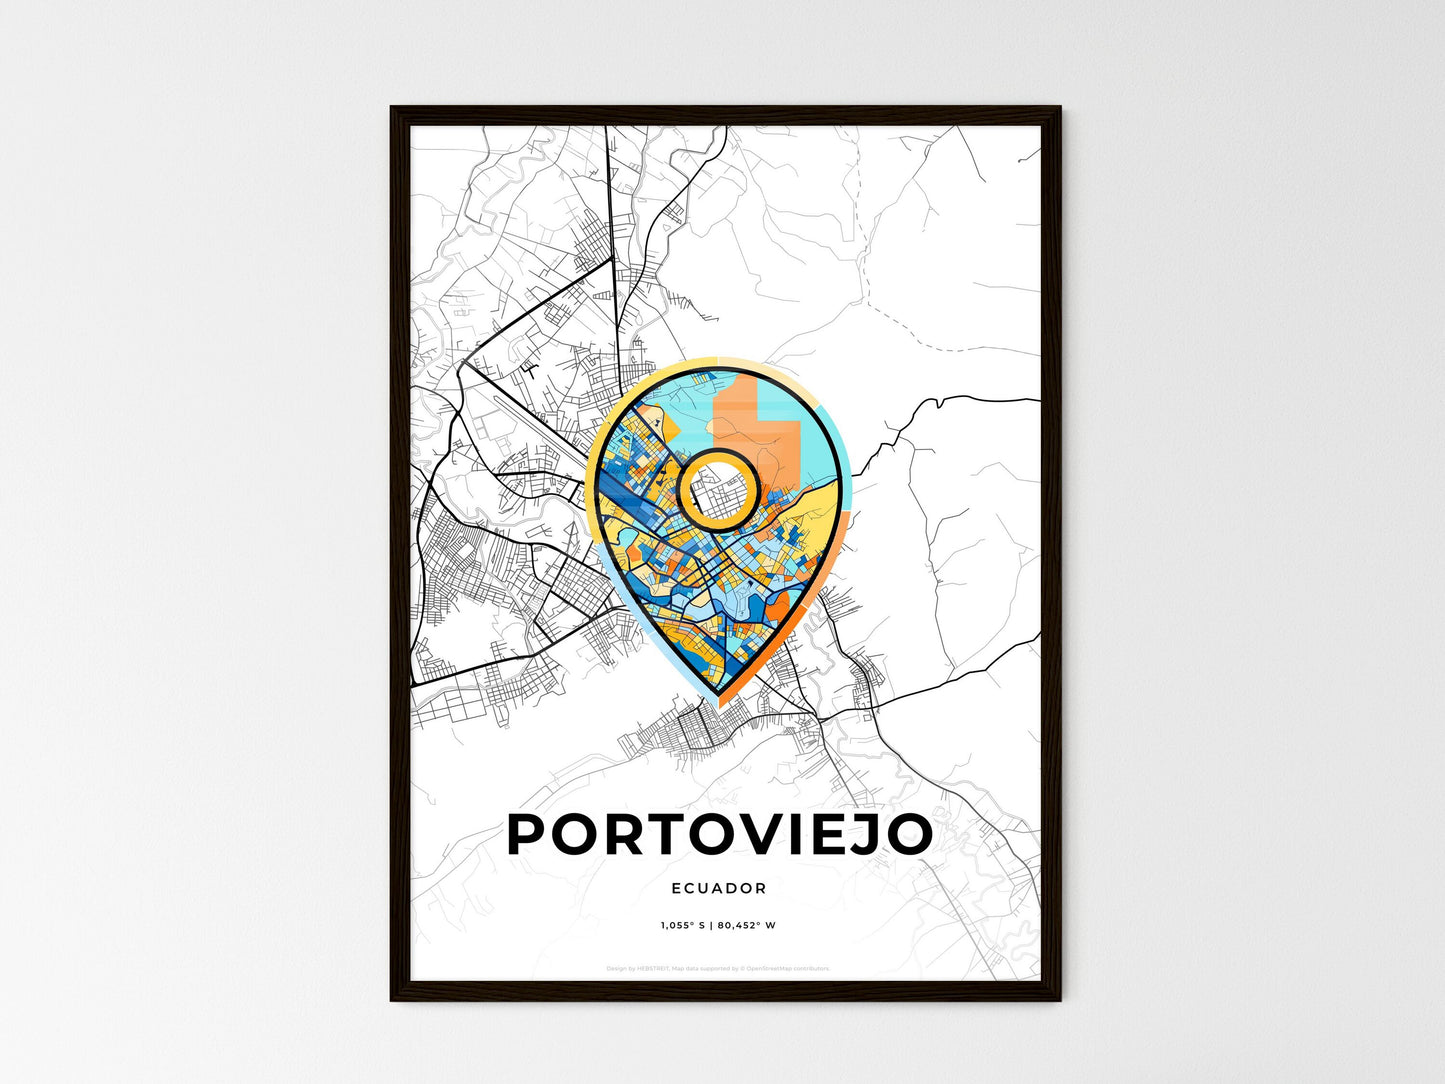 PORTOVIEJO ECUADOR minimal art map with a colorful icon. Style 1